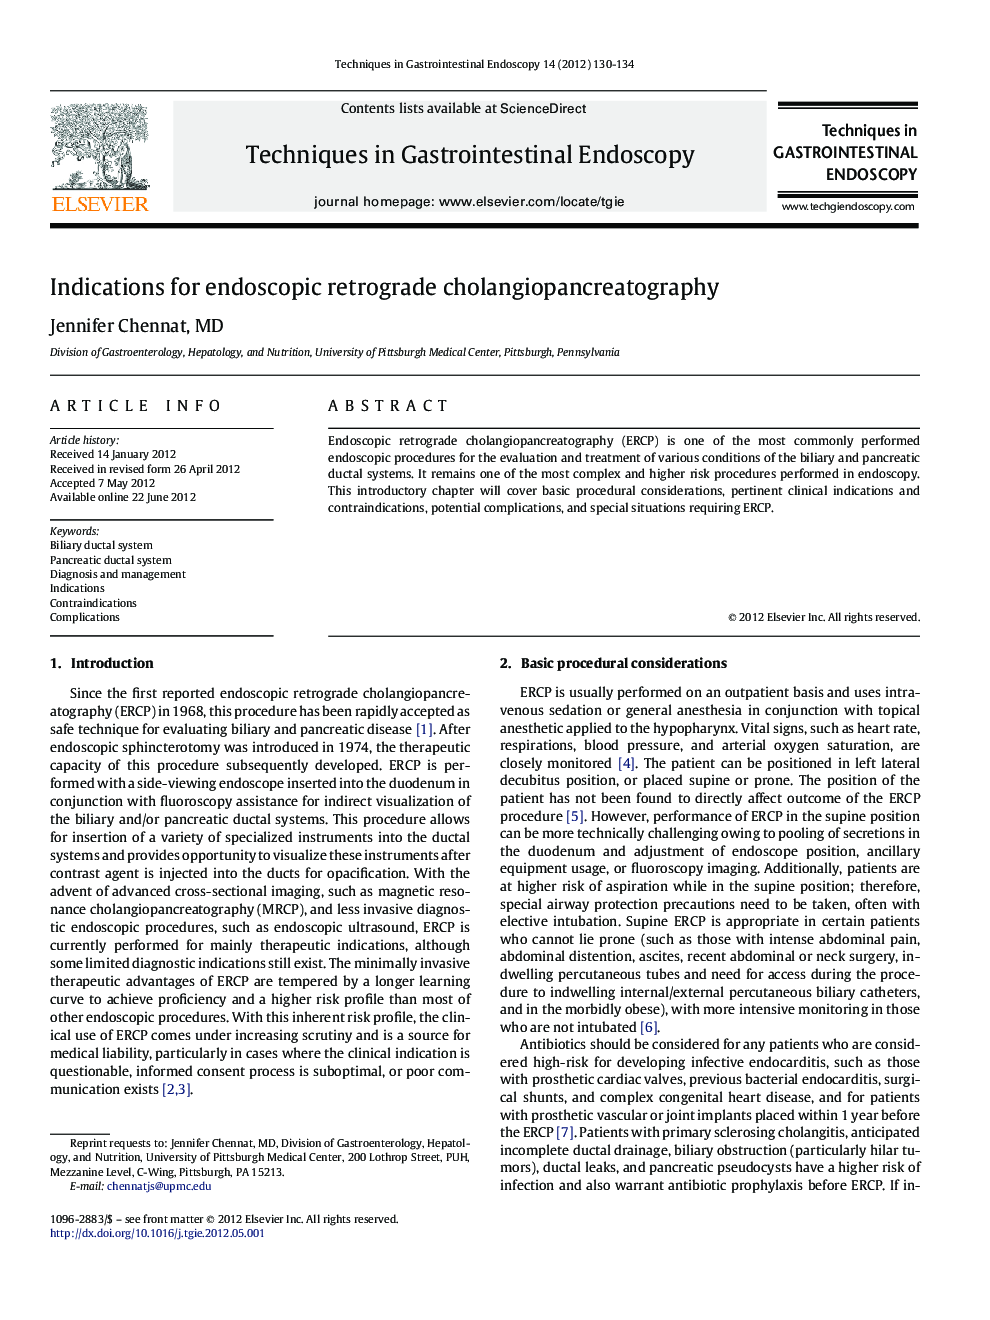 Indications for endoscopic retrograde cholangiopancreatography